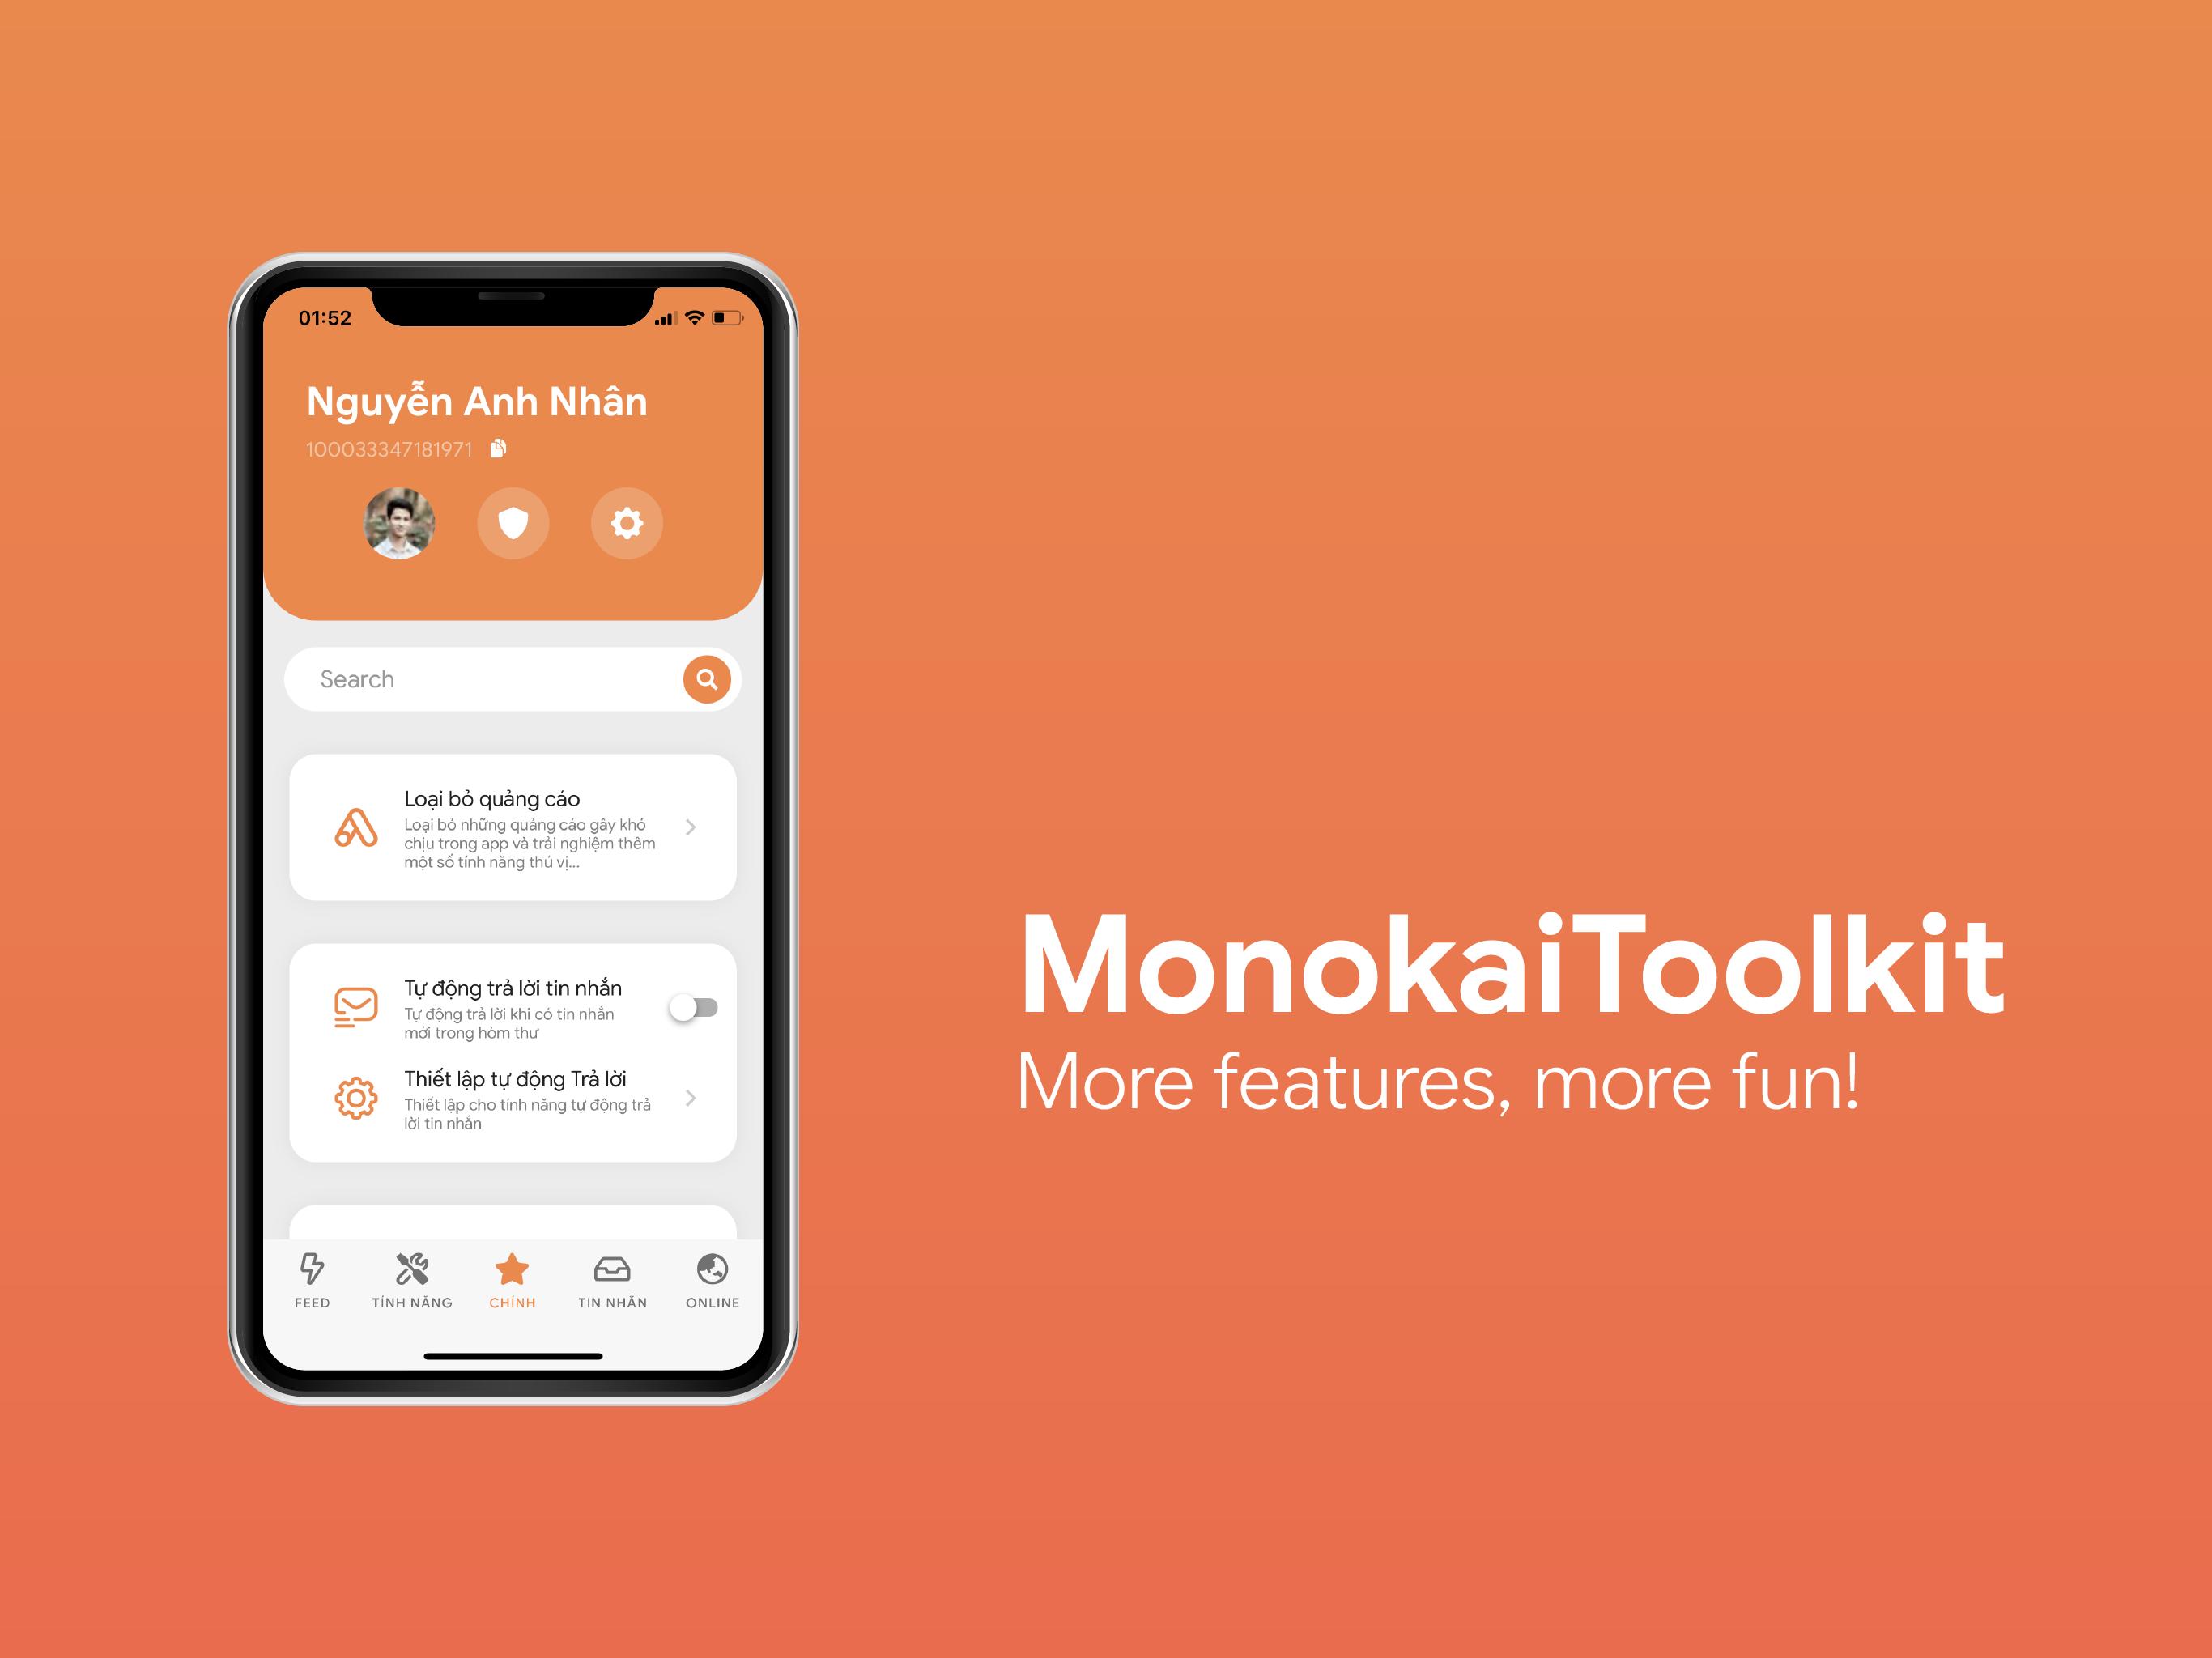 MonokaiToolkit Super Toolkit for Facebook Users 4.7.1 Screenshot 6